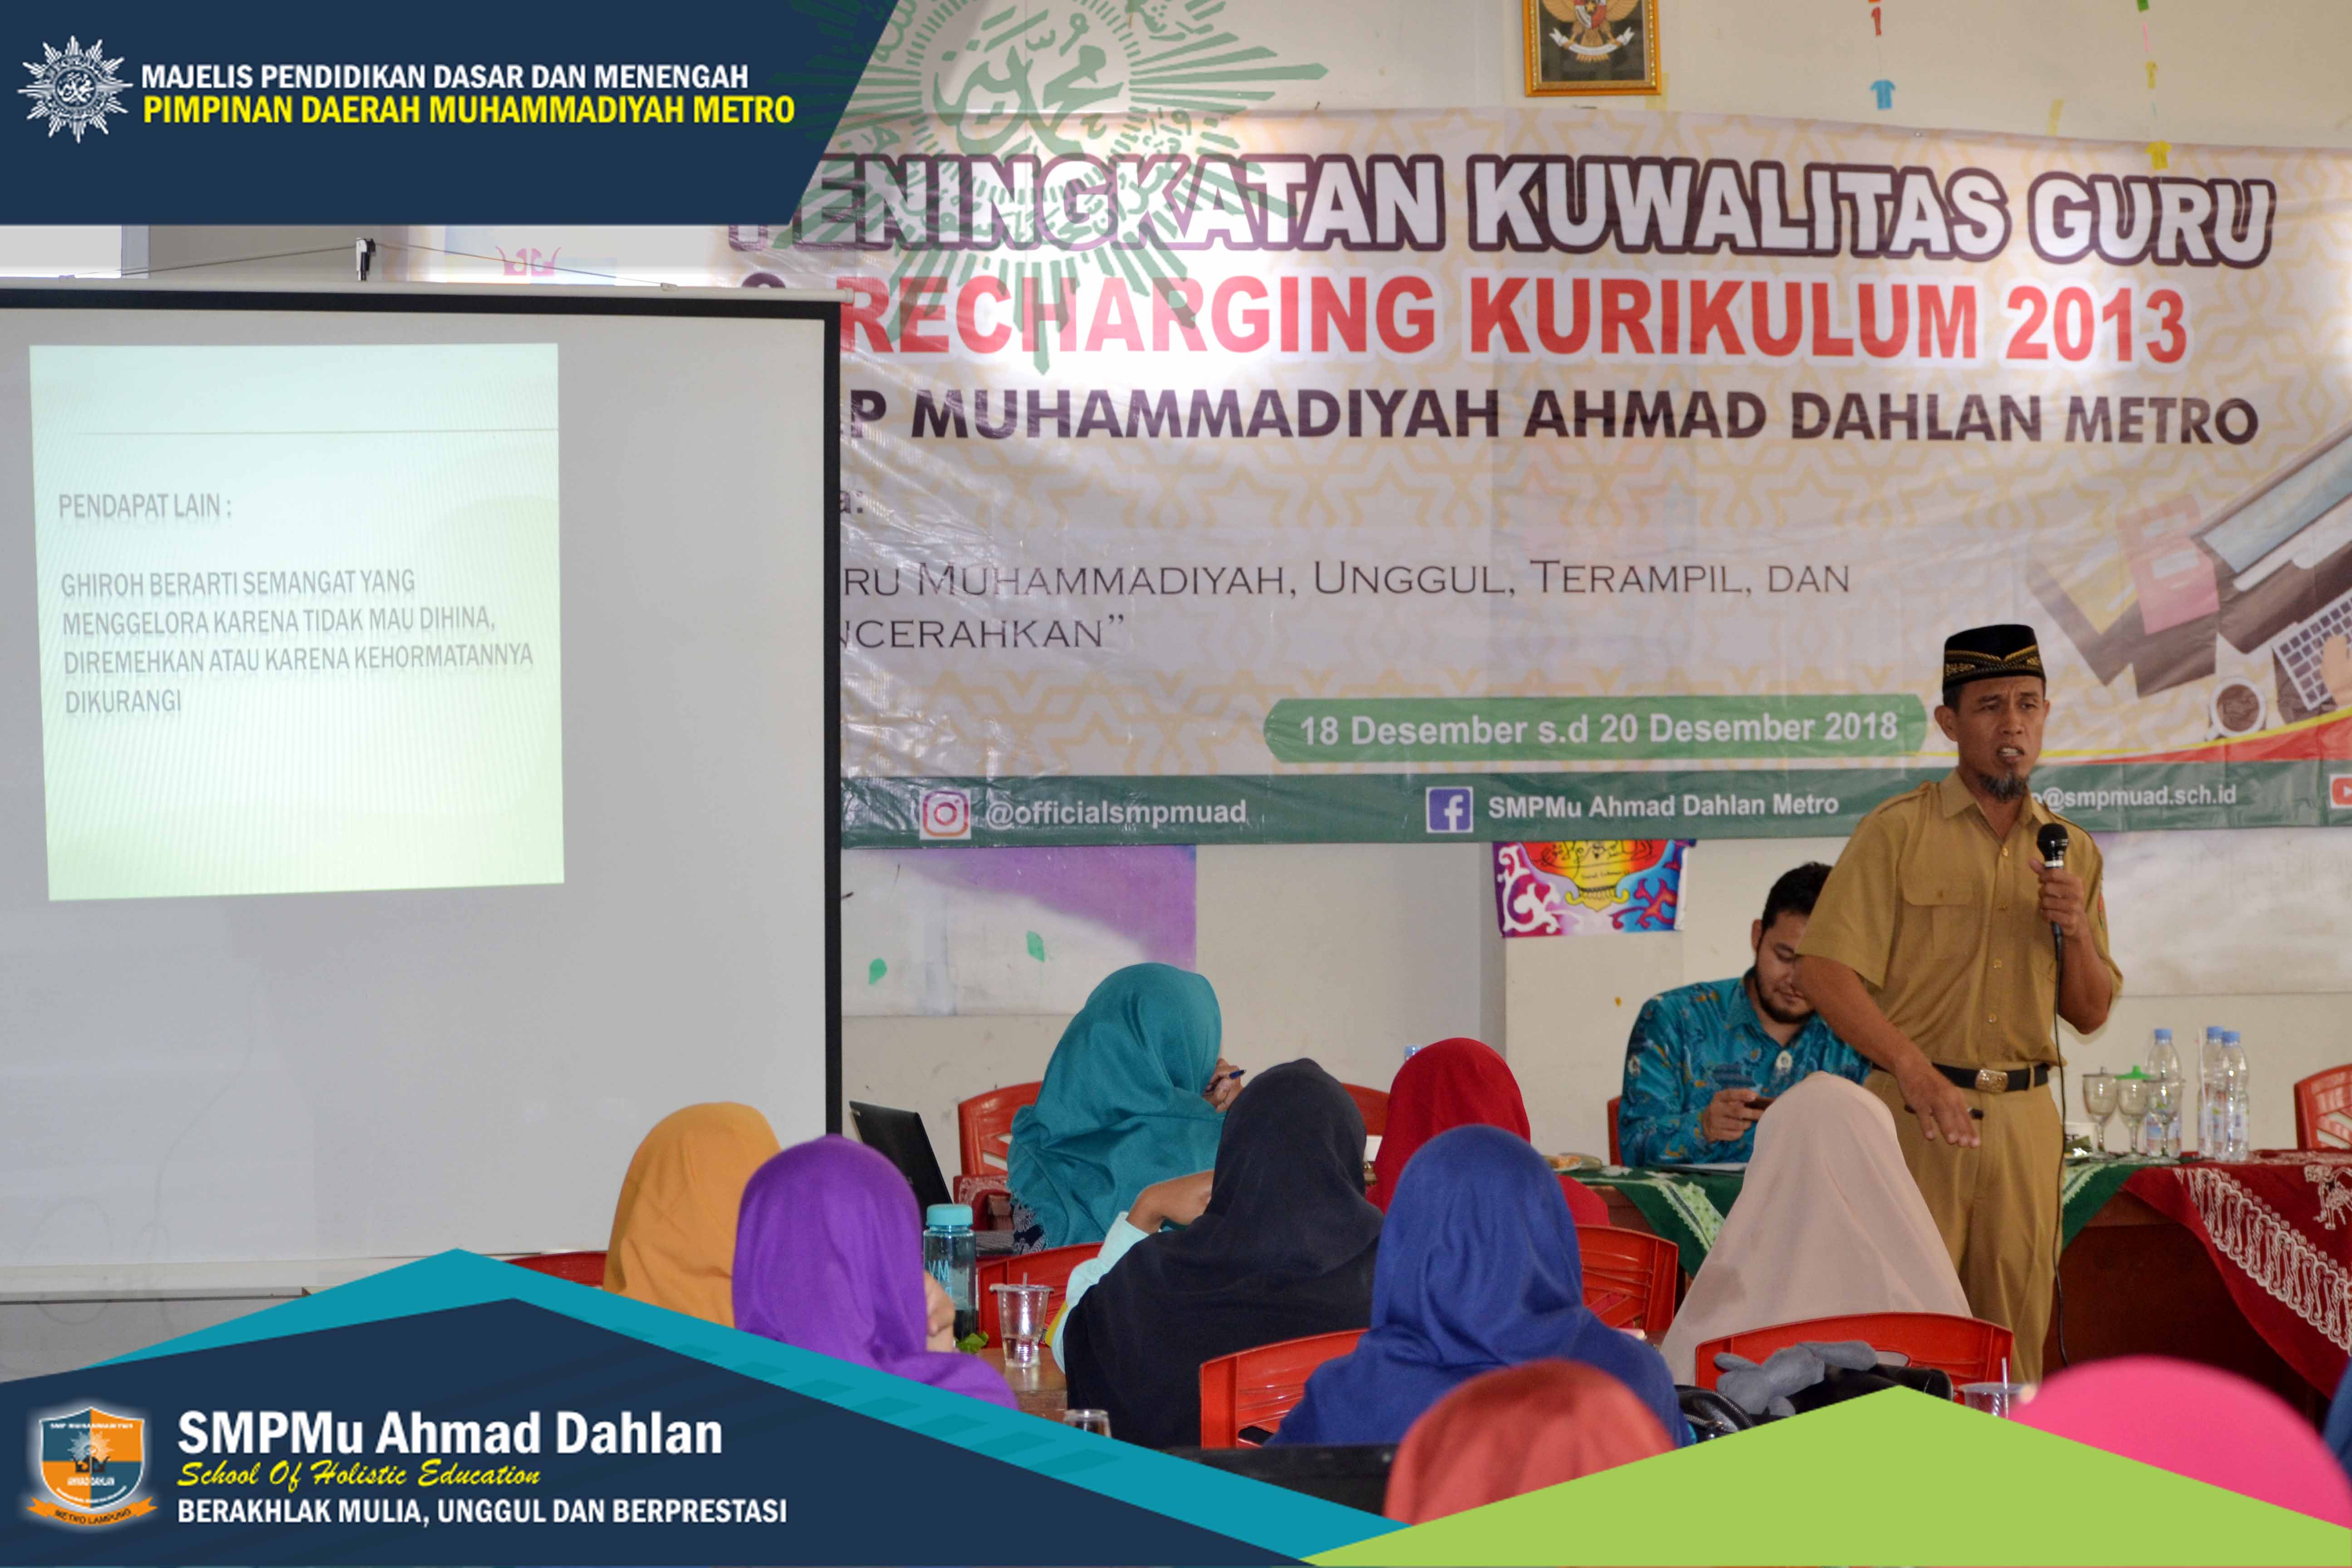 Peningkatan Kualitas Guru dan Recharging K 13 SMP Mu Ahmad Dahlan